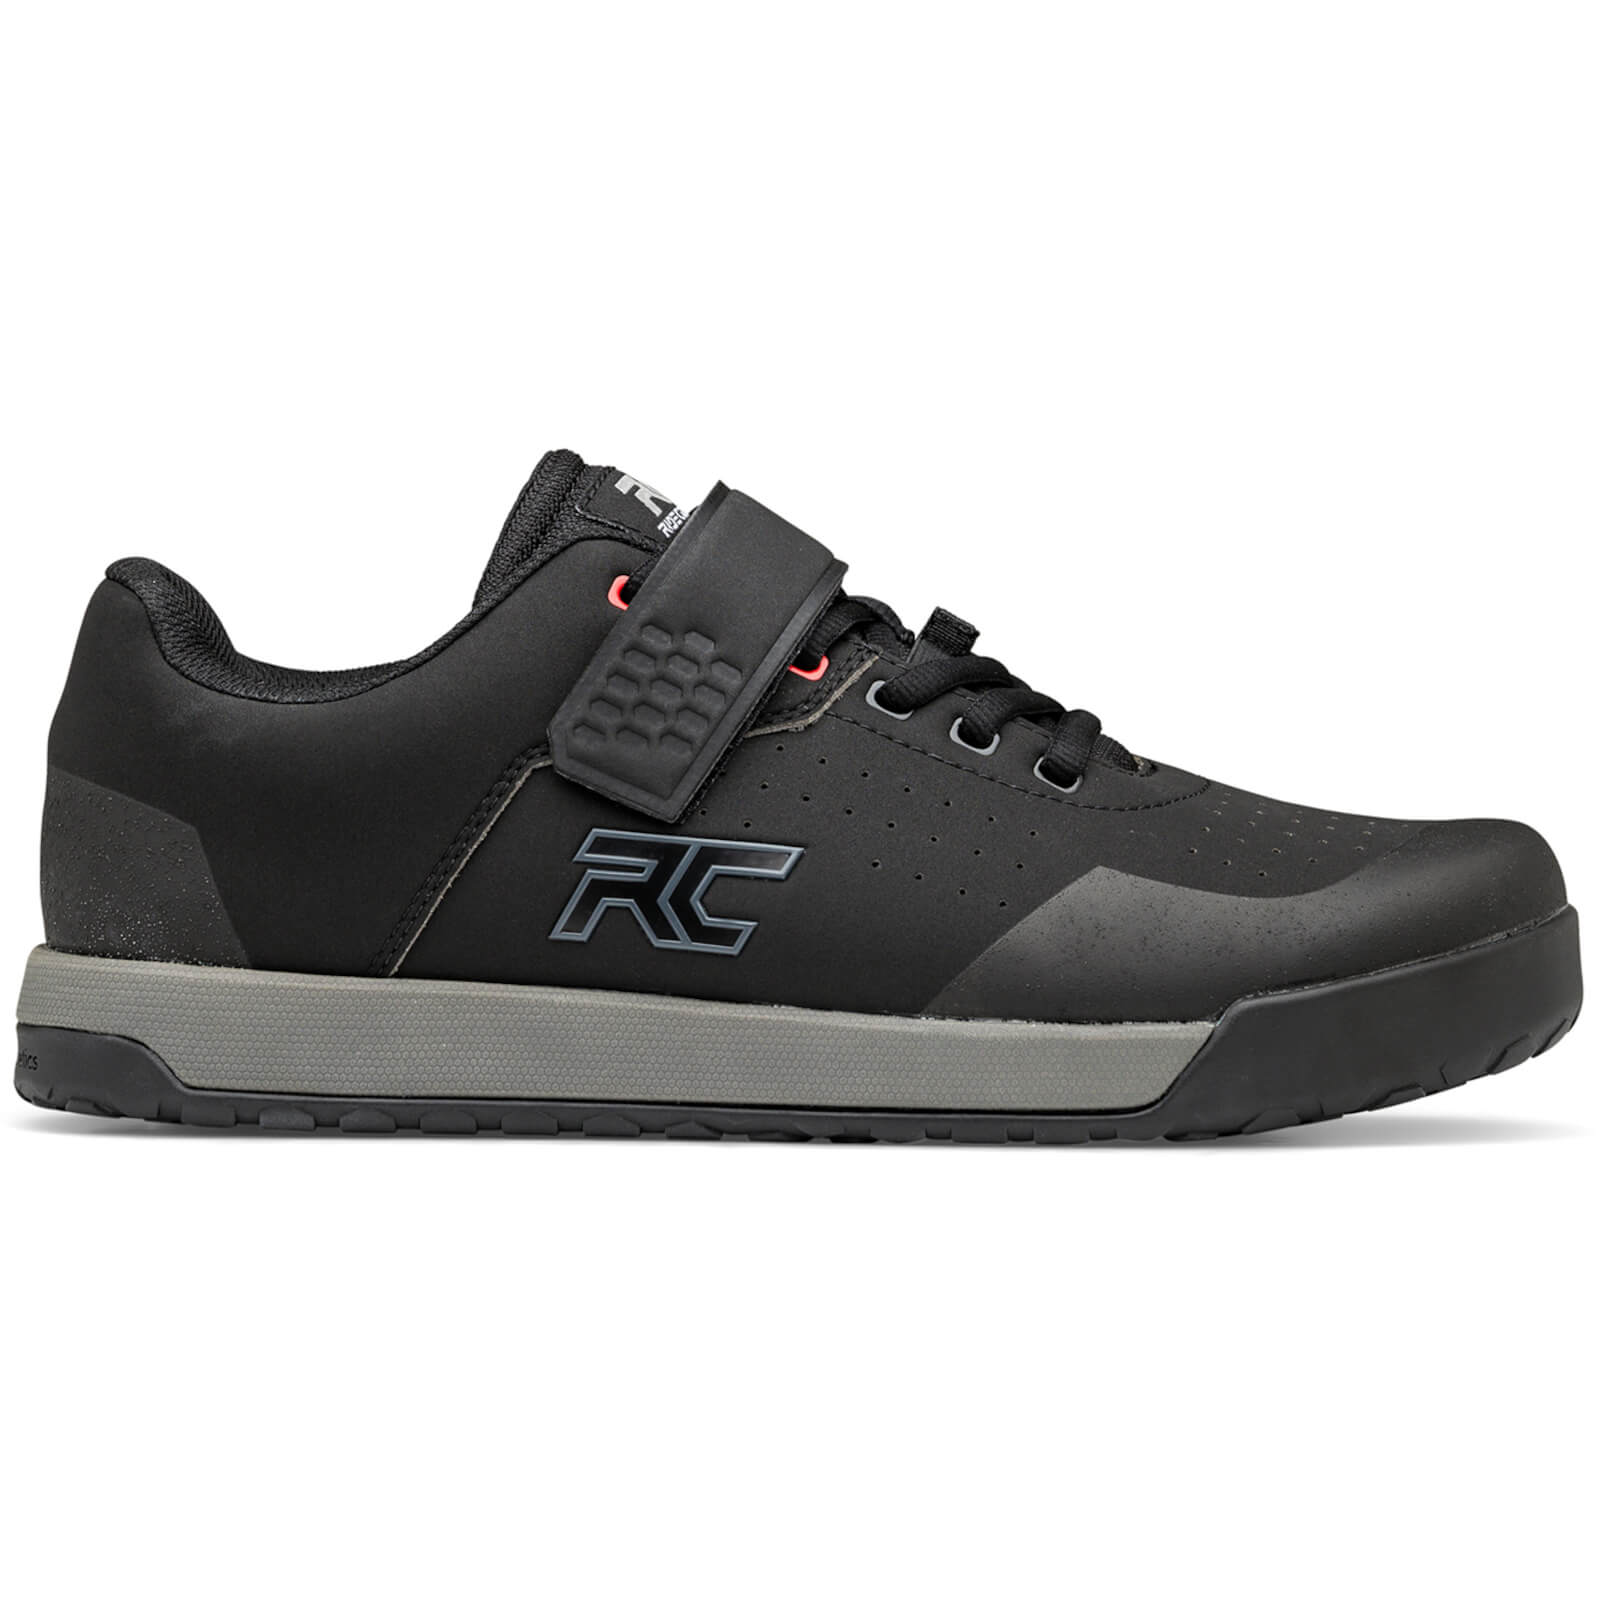 Ride Concepts Hellion Clip MTB Shoes - UK 10/EU 44.5 - Black/Charcoal